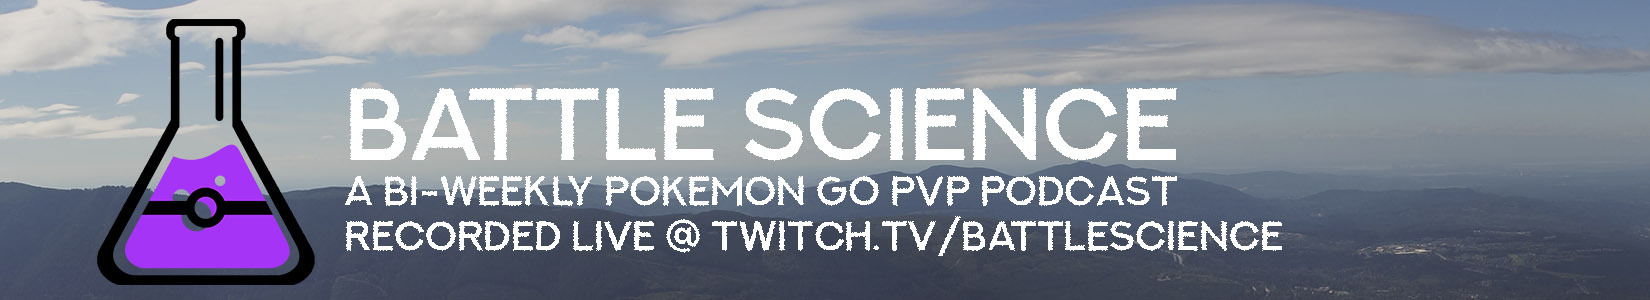 Battle Science: a Pokemon Go PvP Podcast header image 1